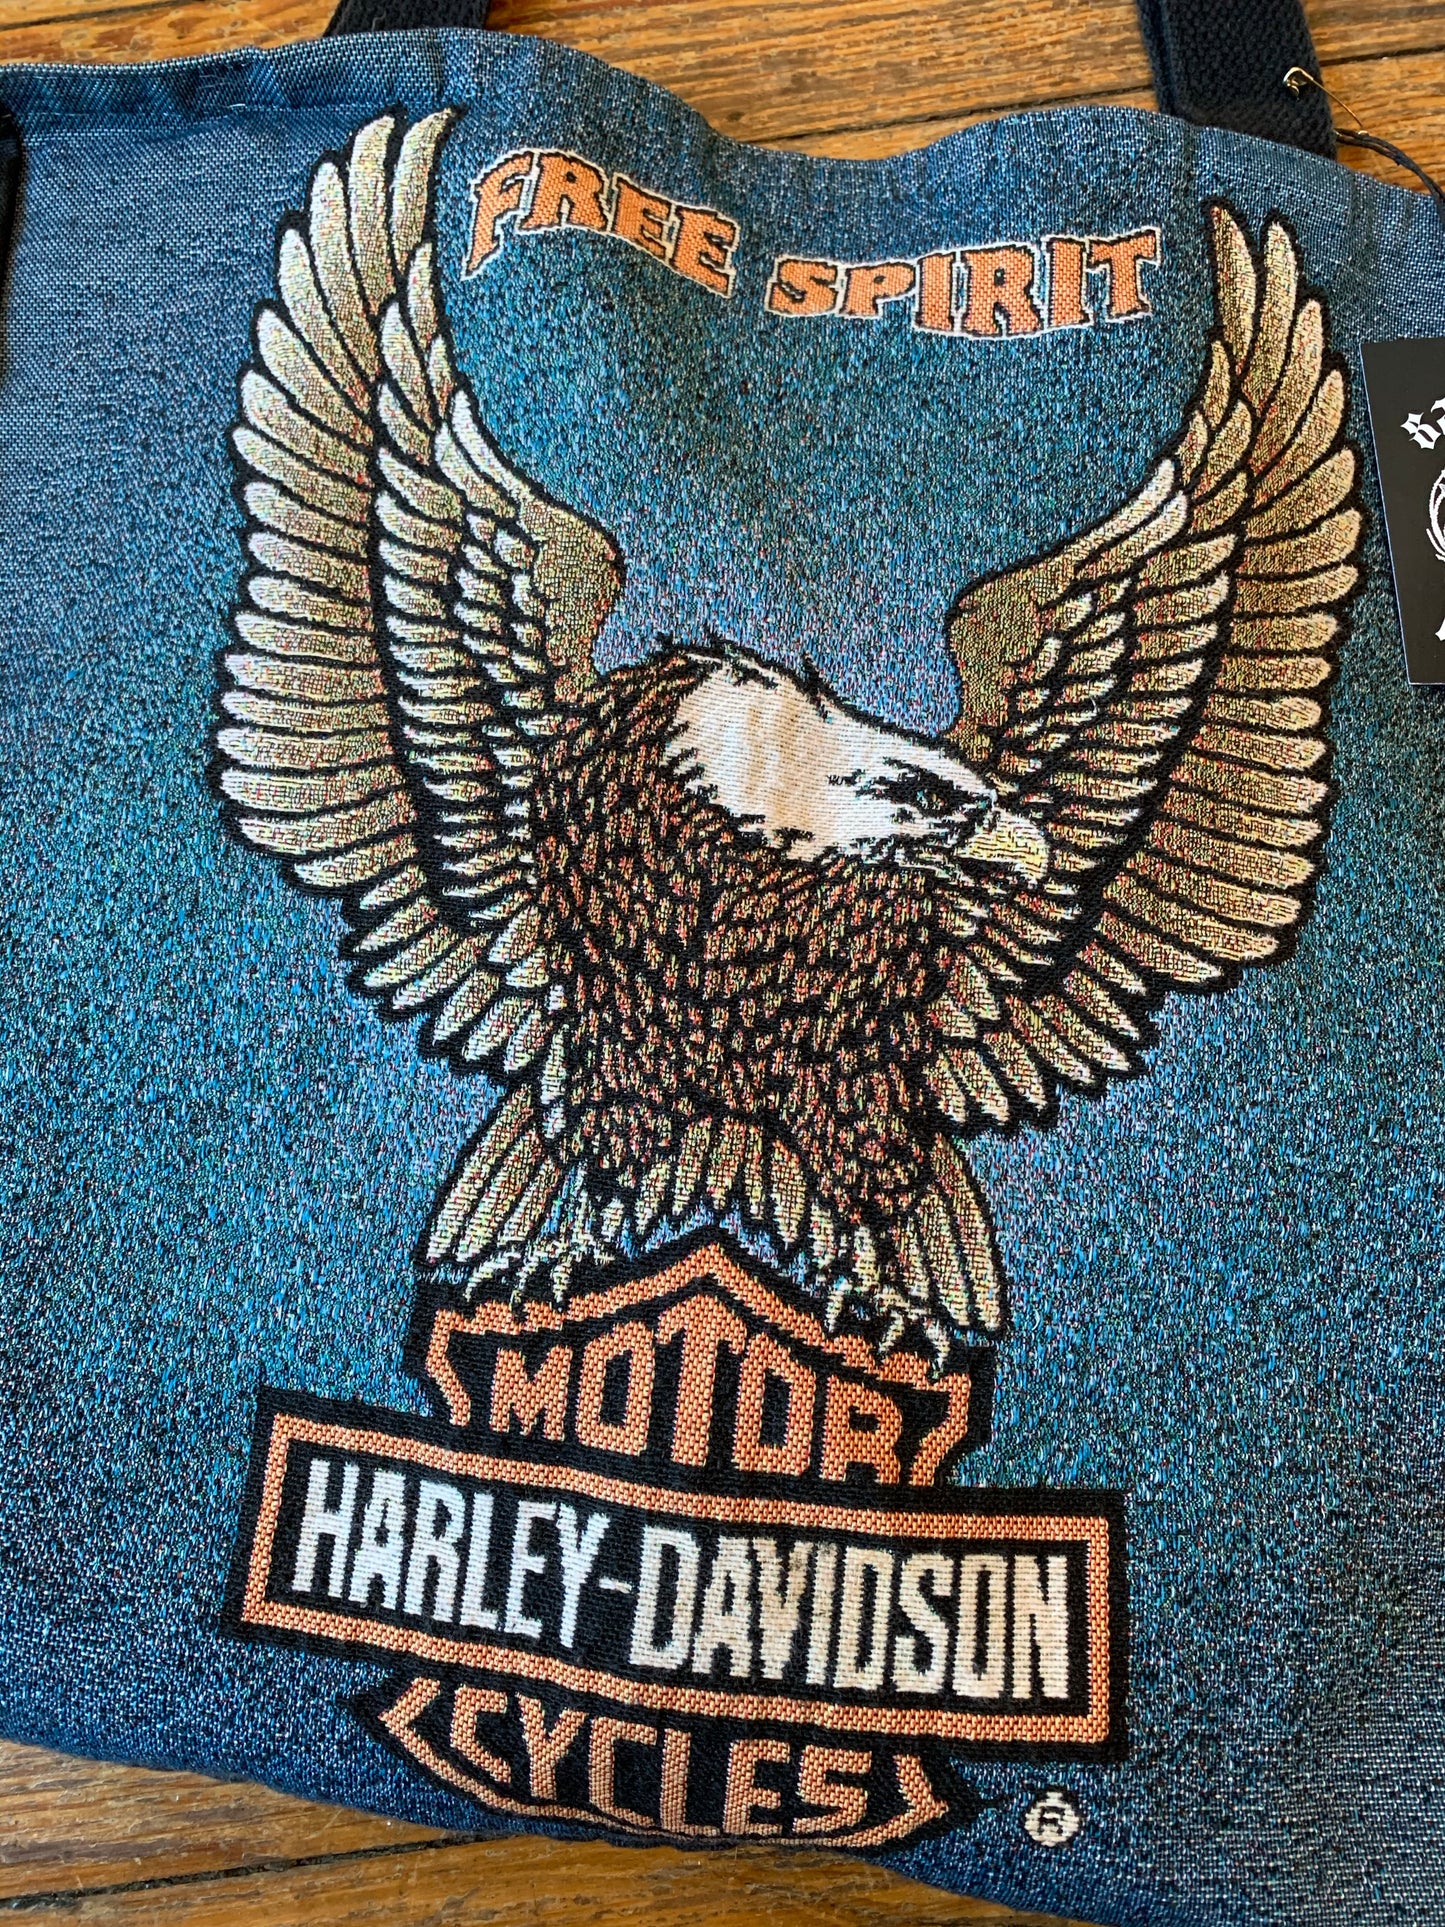 Harley-Davidson Denim Free Spirit Canvas Tote Bag